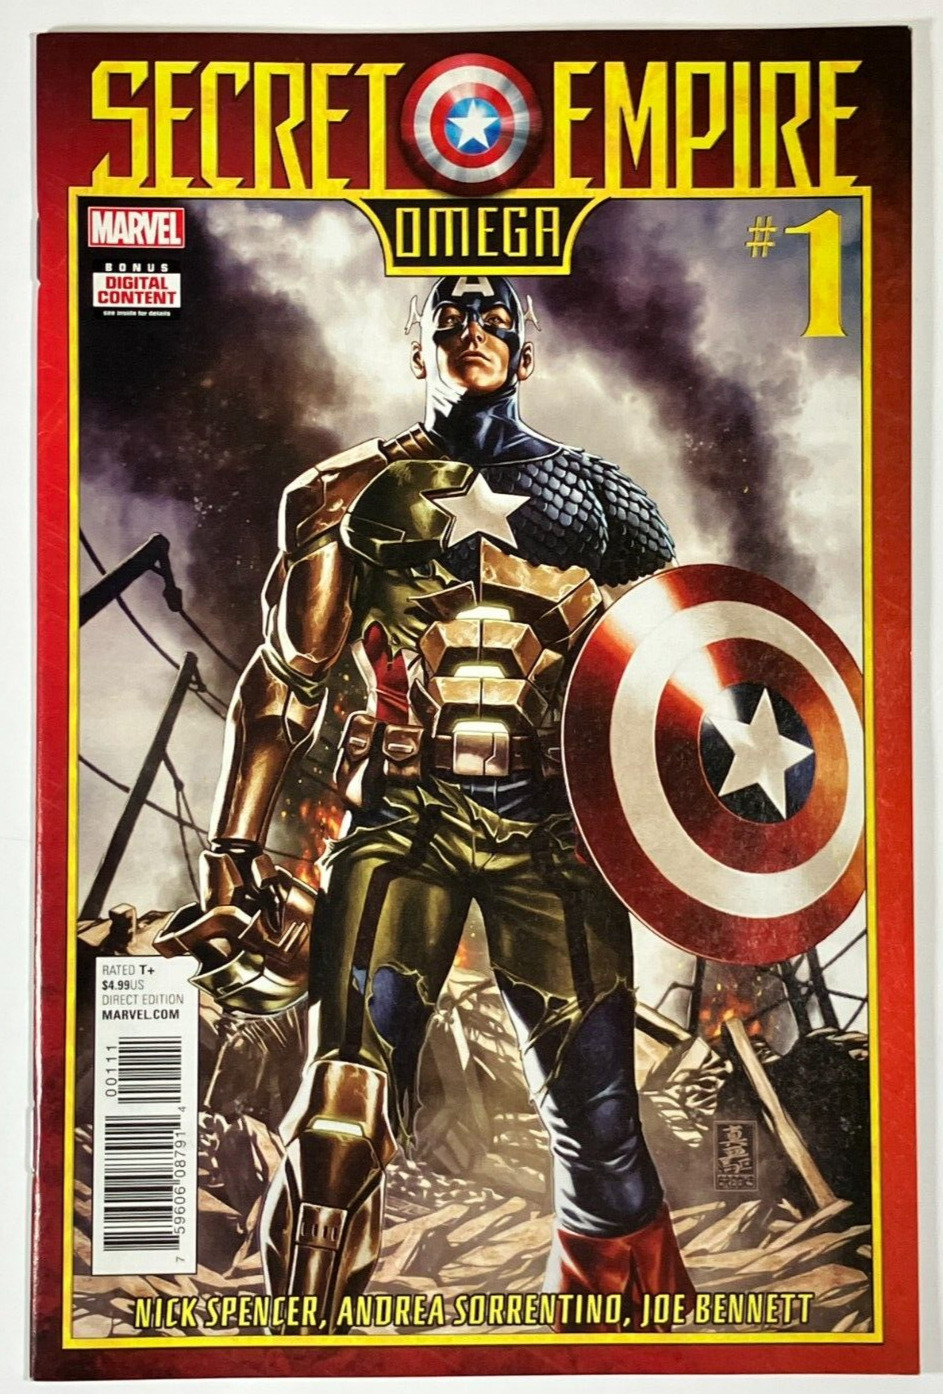 2017 Marvel Comics Secret Empire Omega #1 Captain America